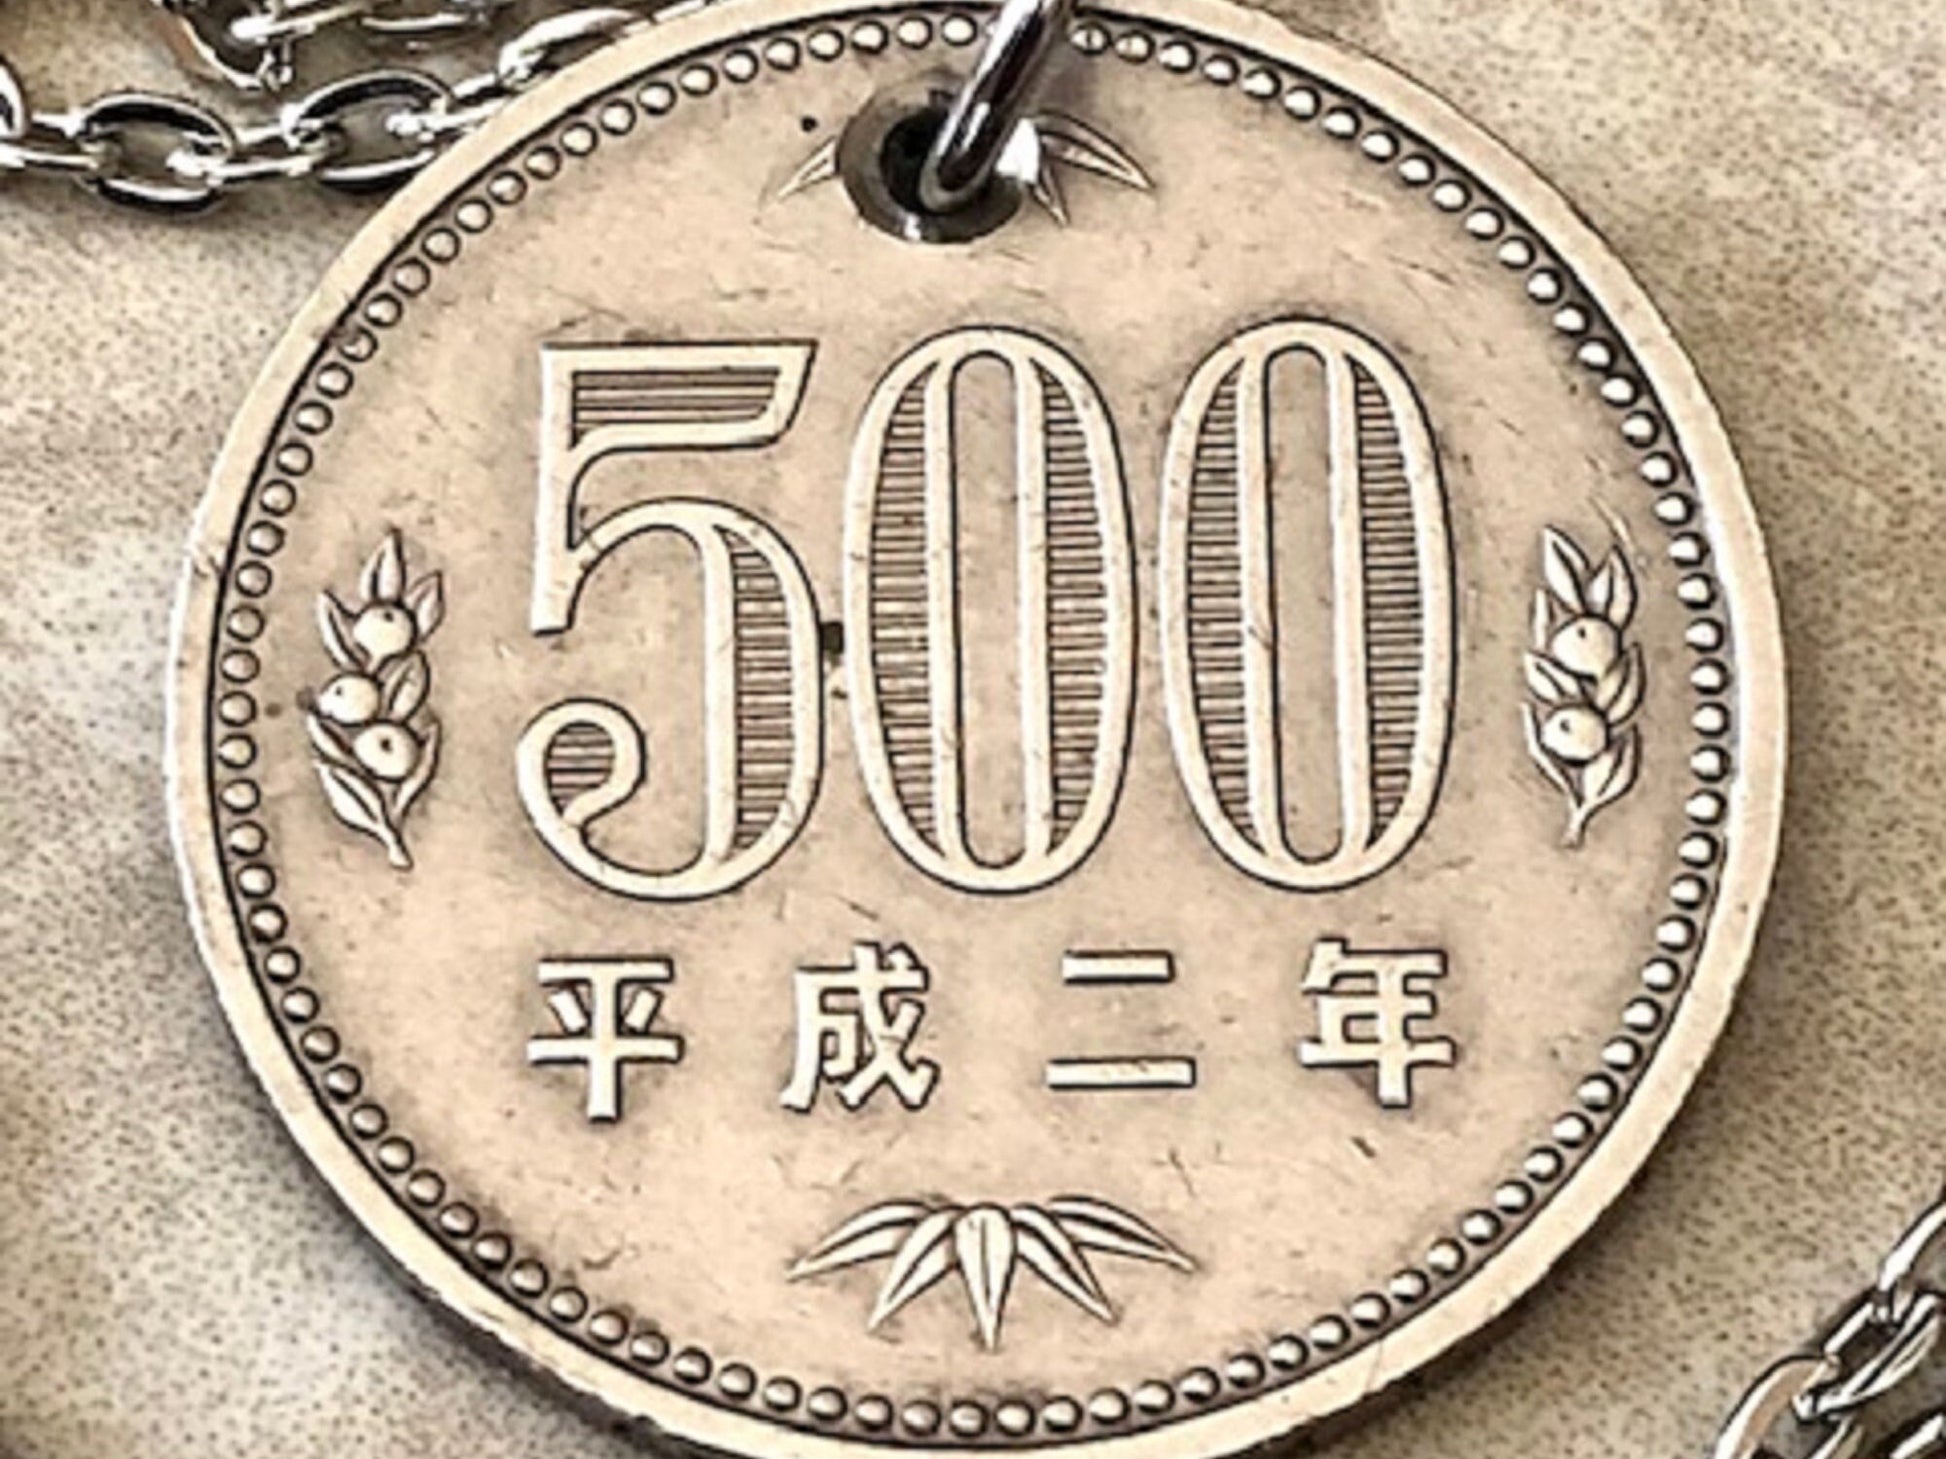 Japan Coin Necklace 500 Yen Pendant Japanese Vintage Rare Coins Enthusiast Fashion Accessory Handmade